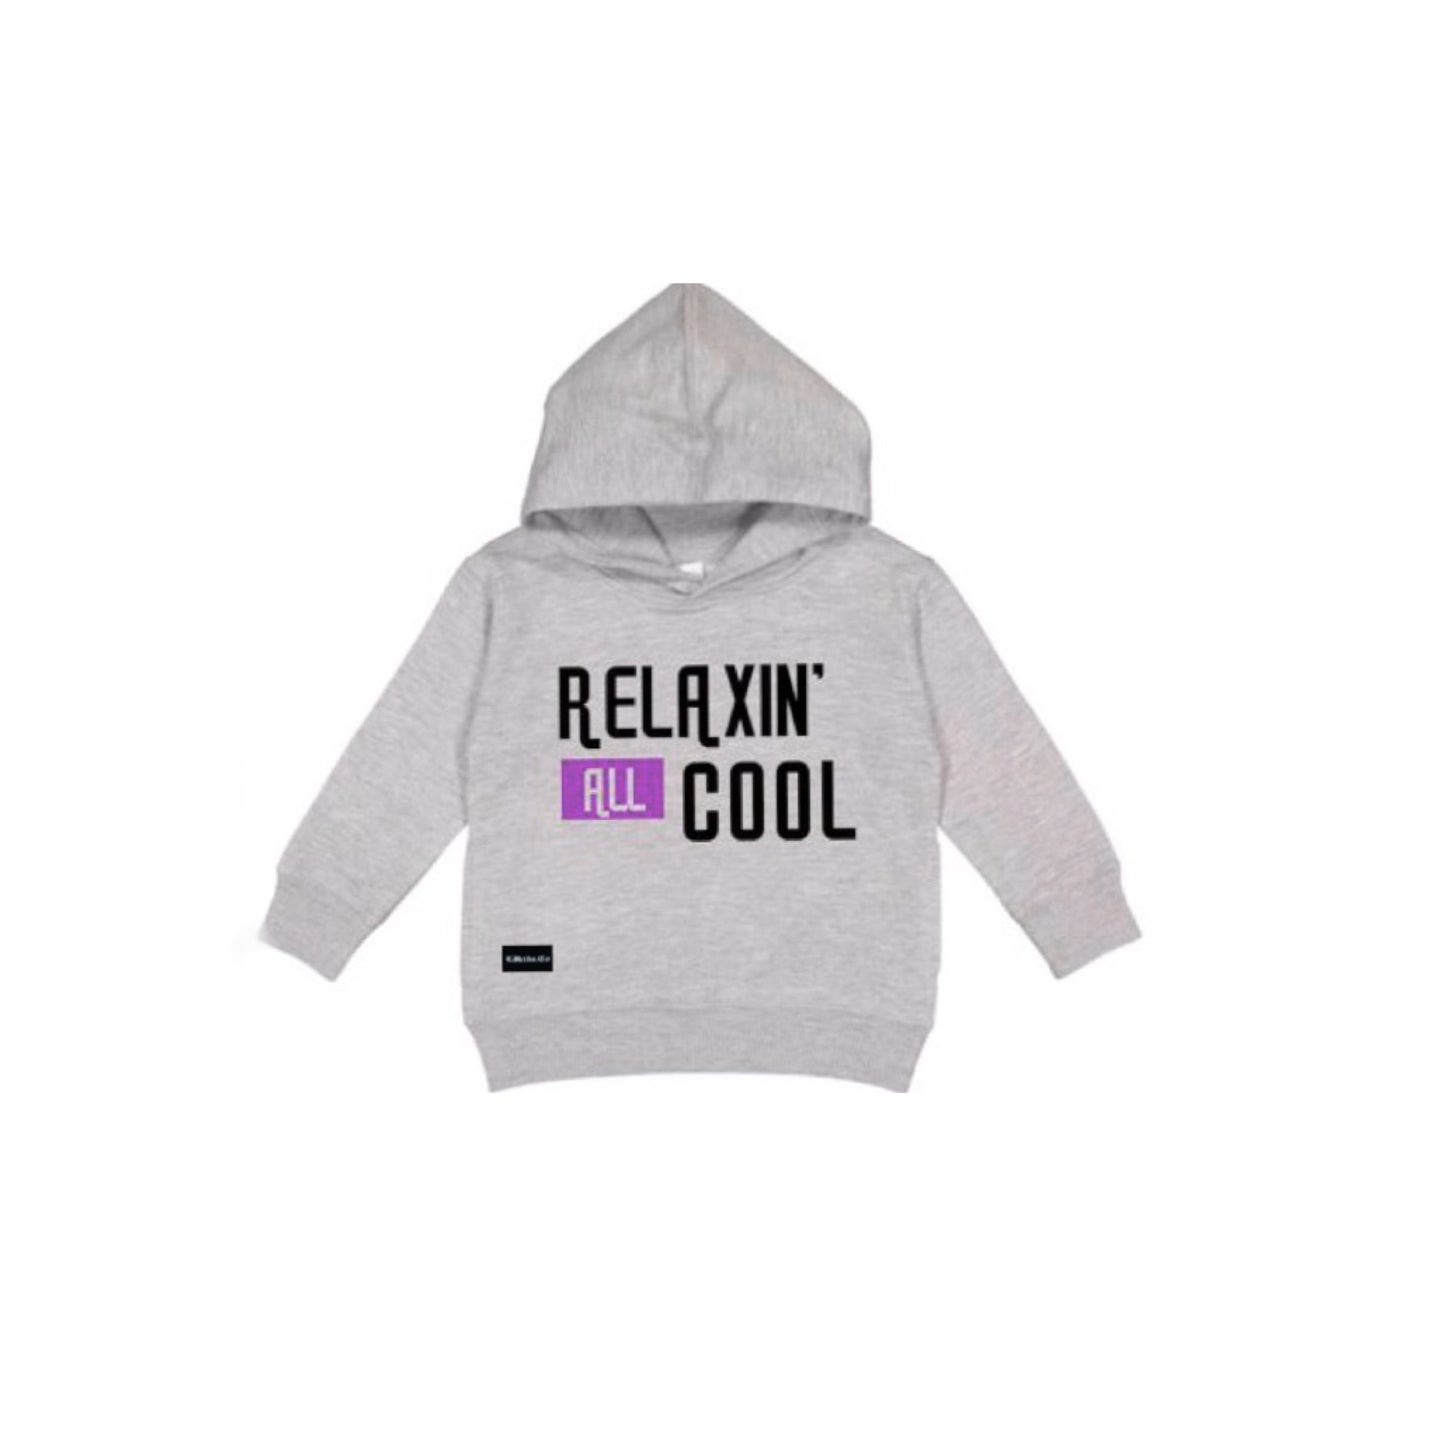 Relaxin’ All Cool Hoodie